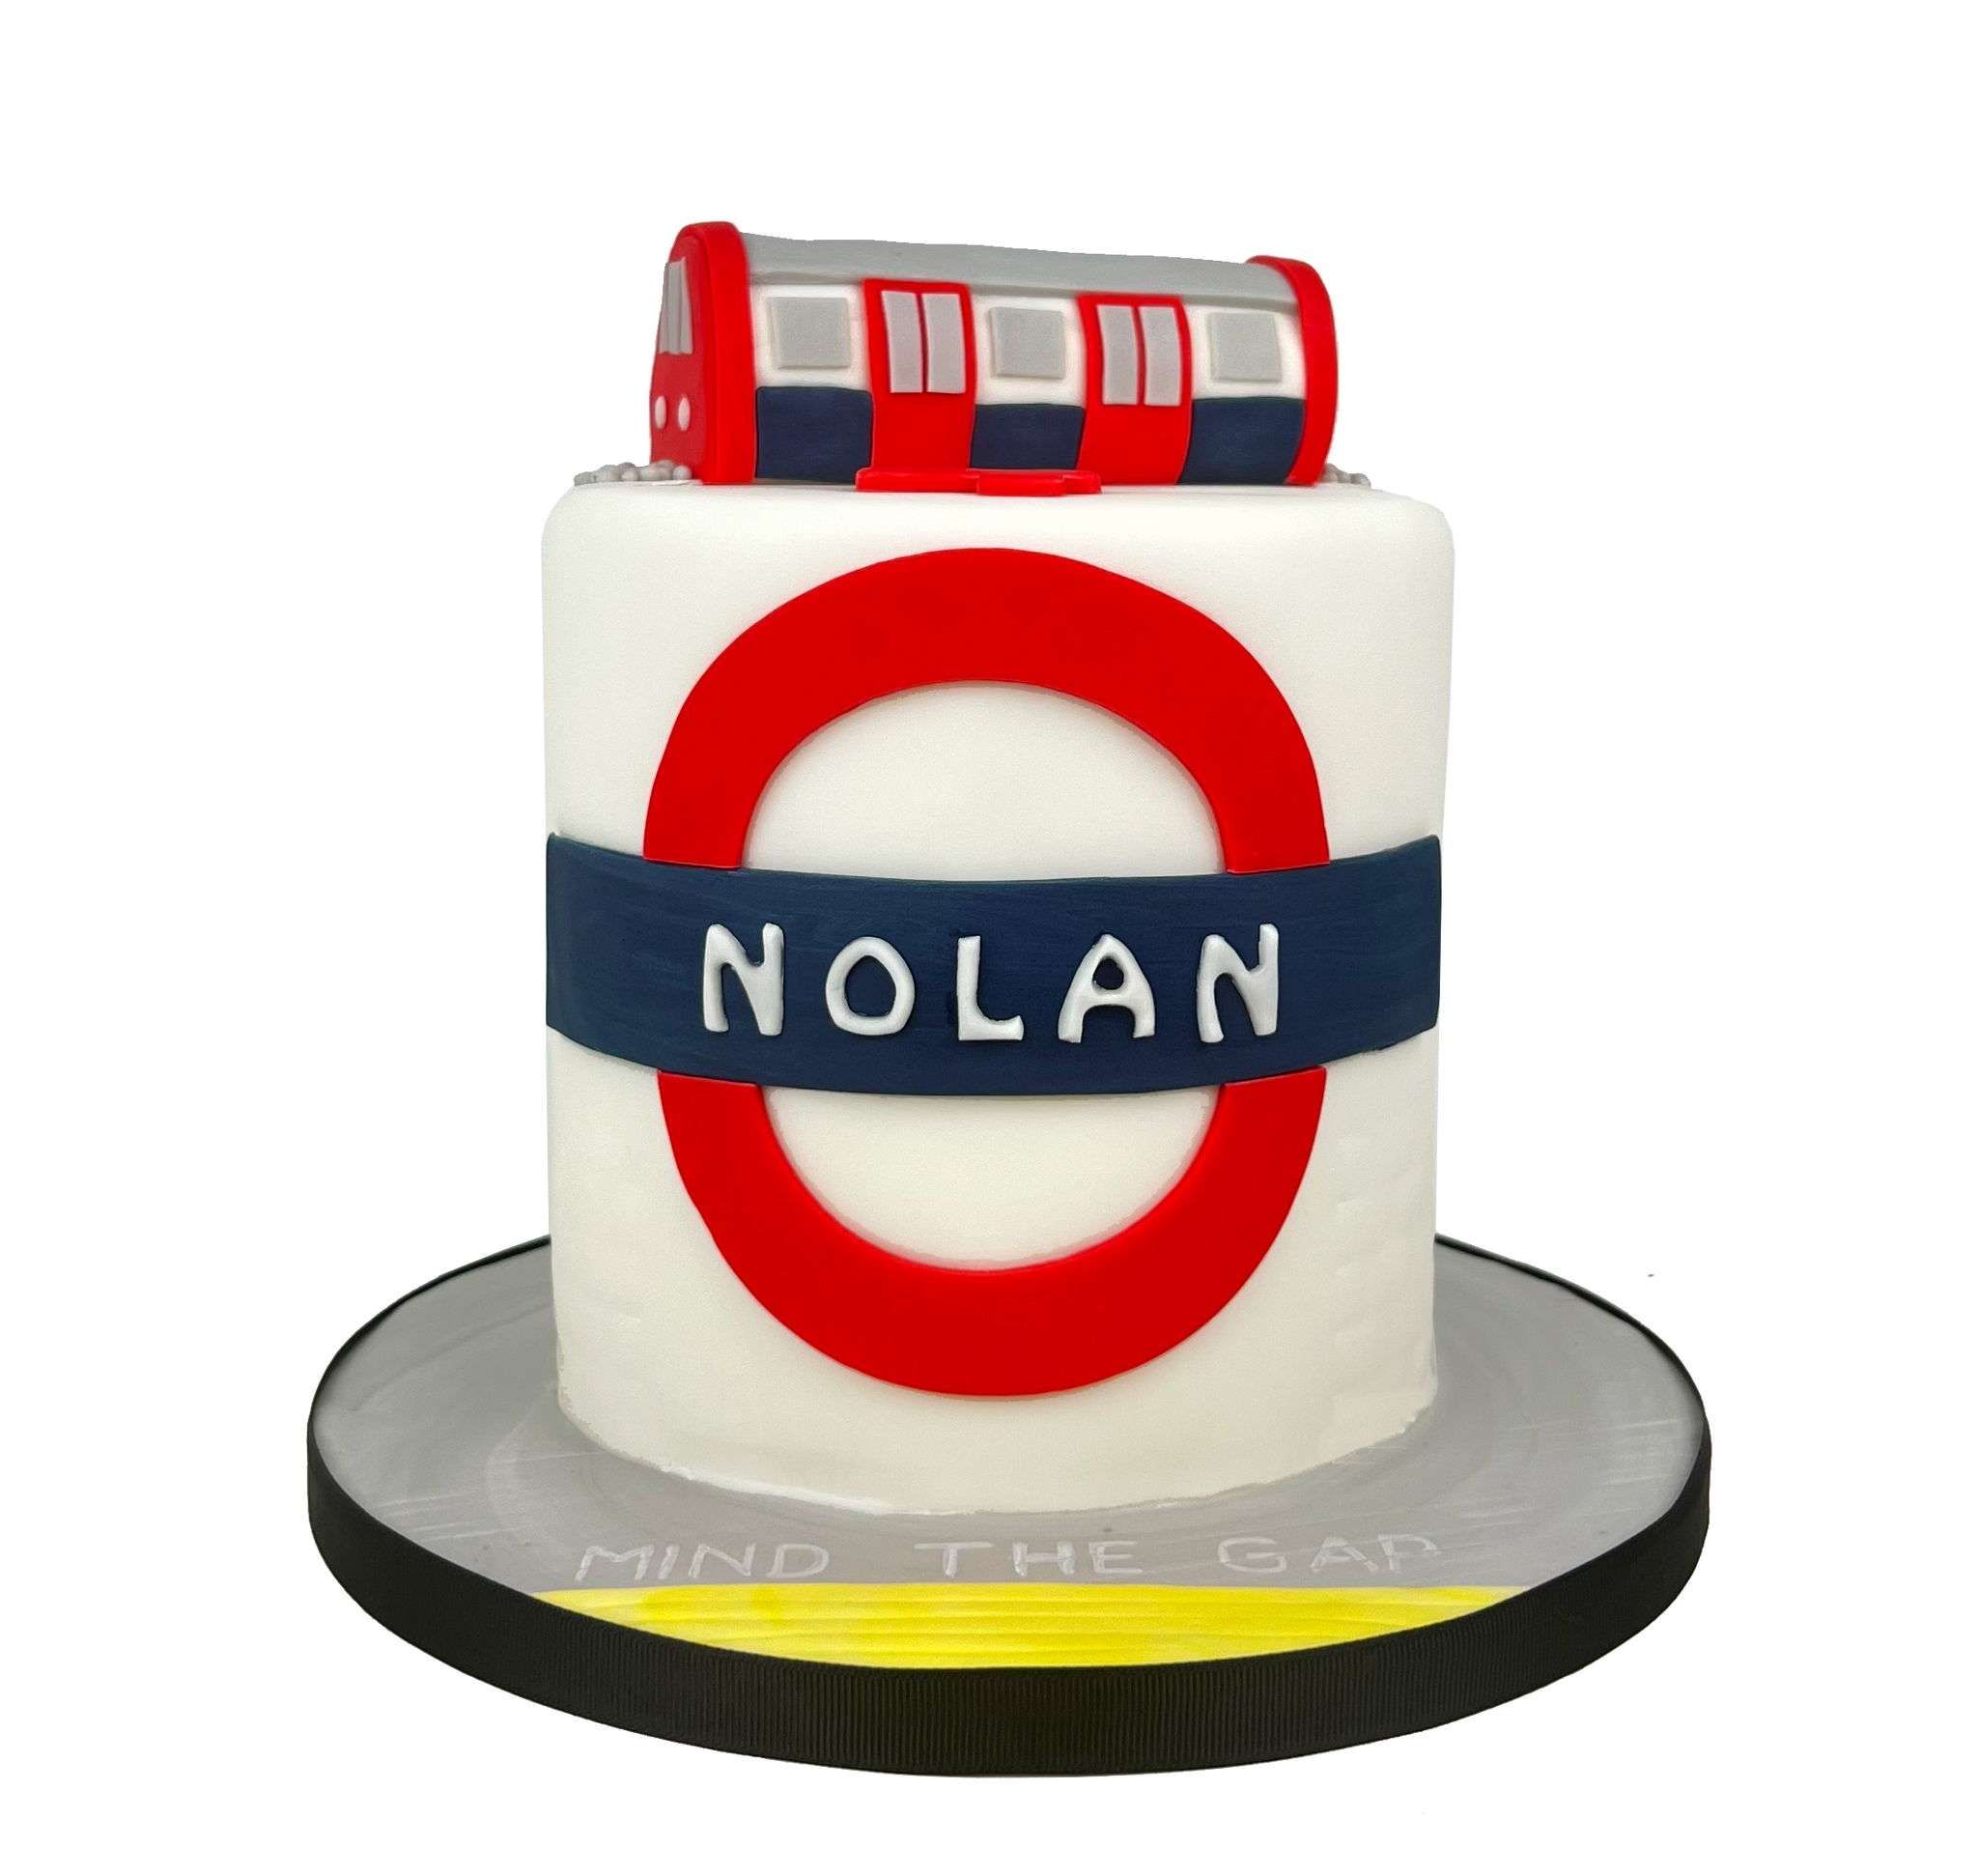 Big Ben UK Theme Novelty Birthday Cake, Novelty Cakes Sydney, 21st Birthday  Cakes, London Theme cake designs, Designer Cakes by EliteCakeDesigns